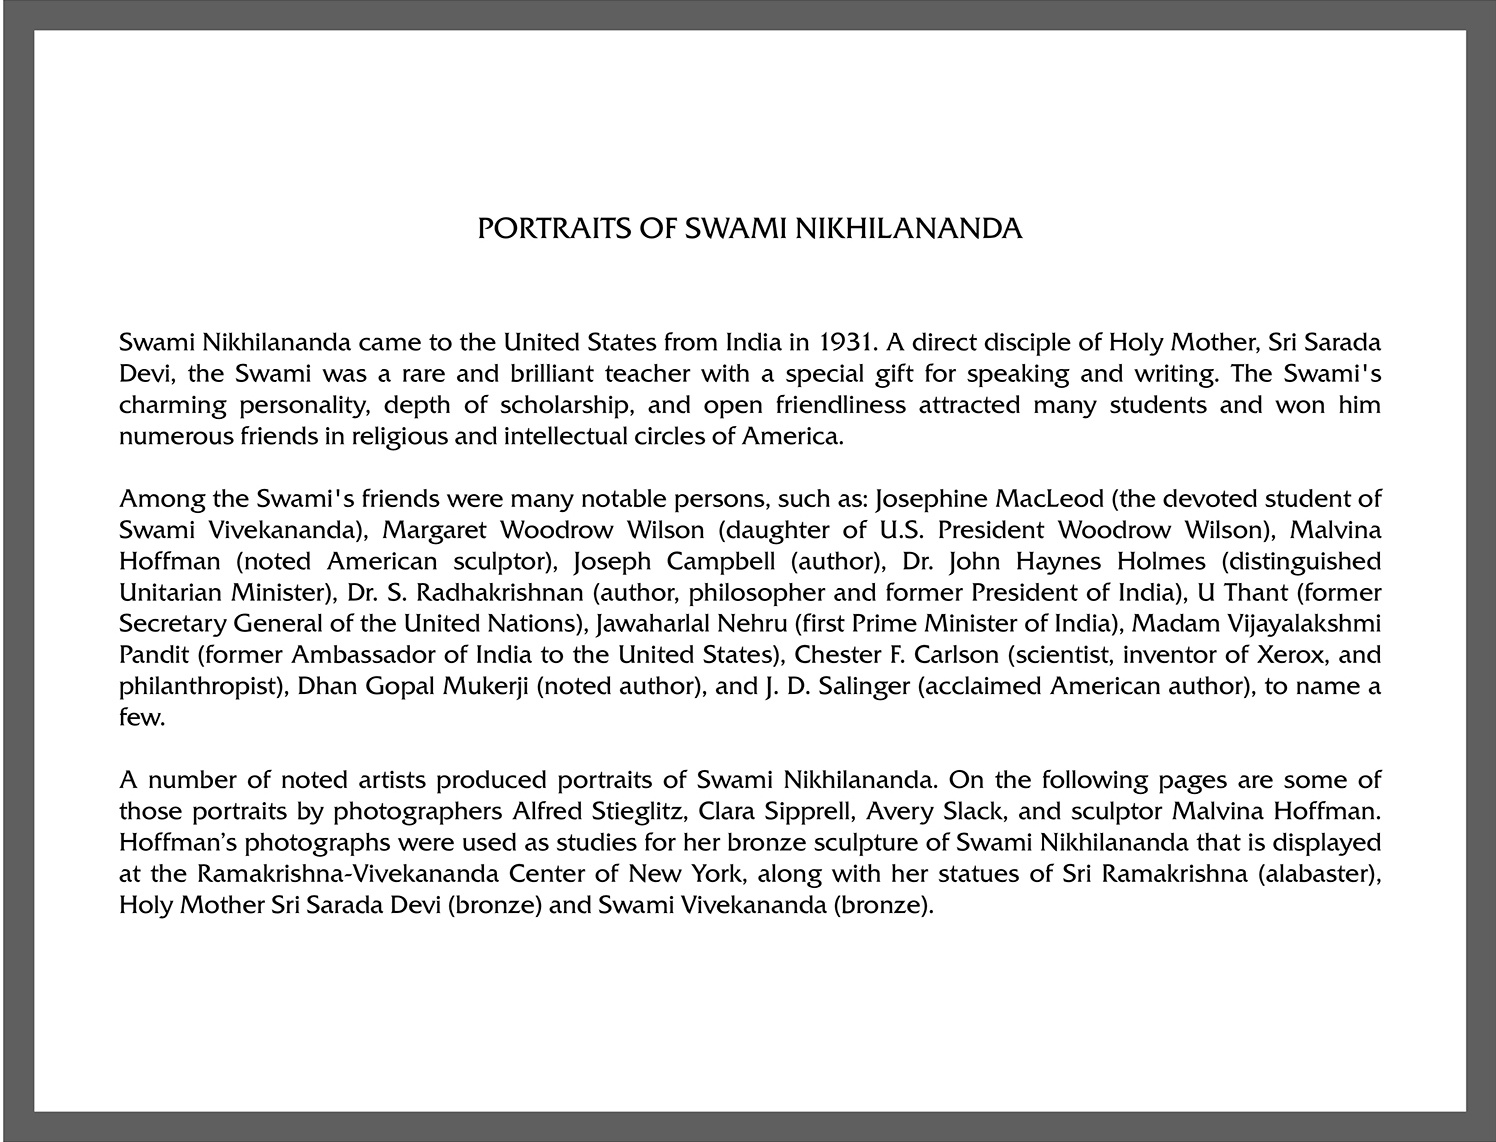 Portraits of Swami Nikhilananda page 2.